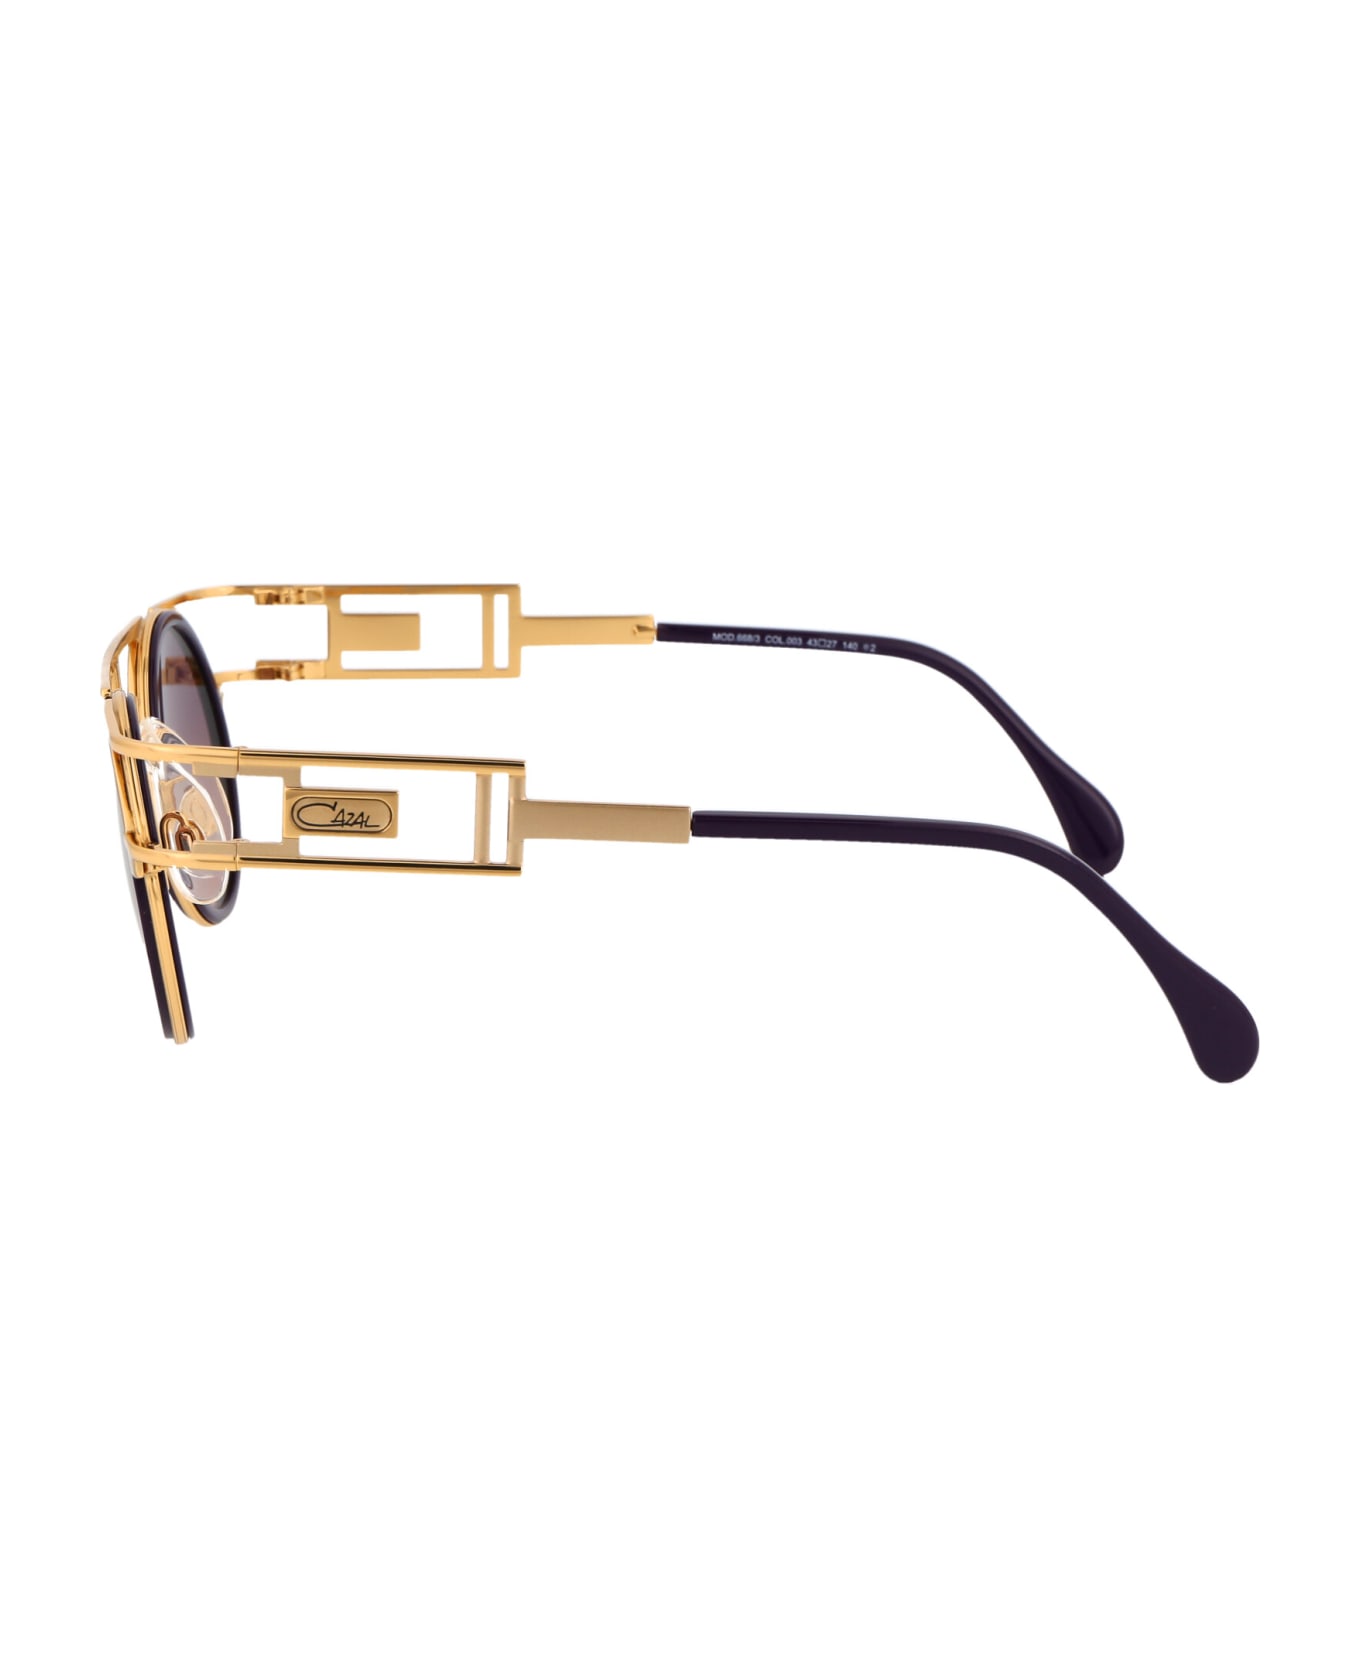 Cazal Mod. 668/3 Sunglasses - 003 GOLD VIOLET